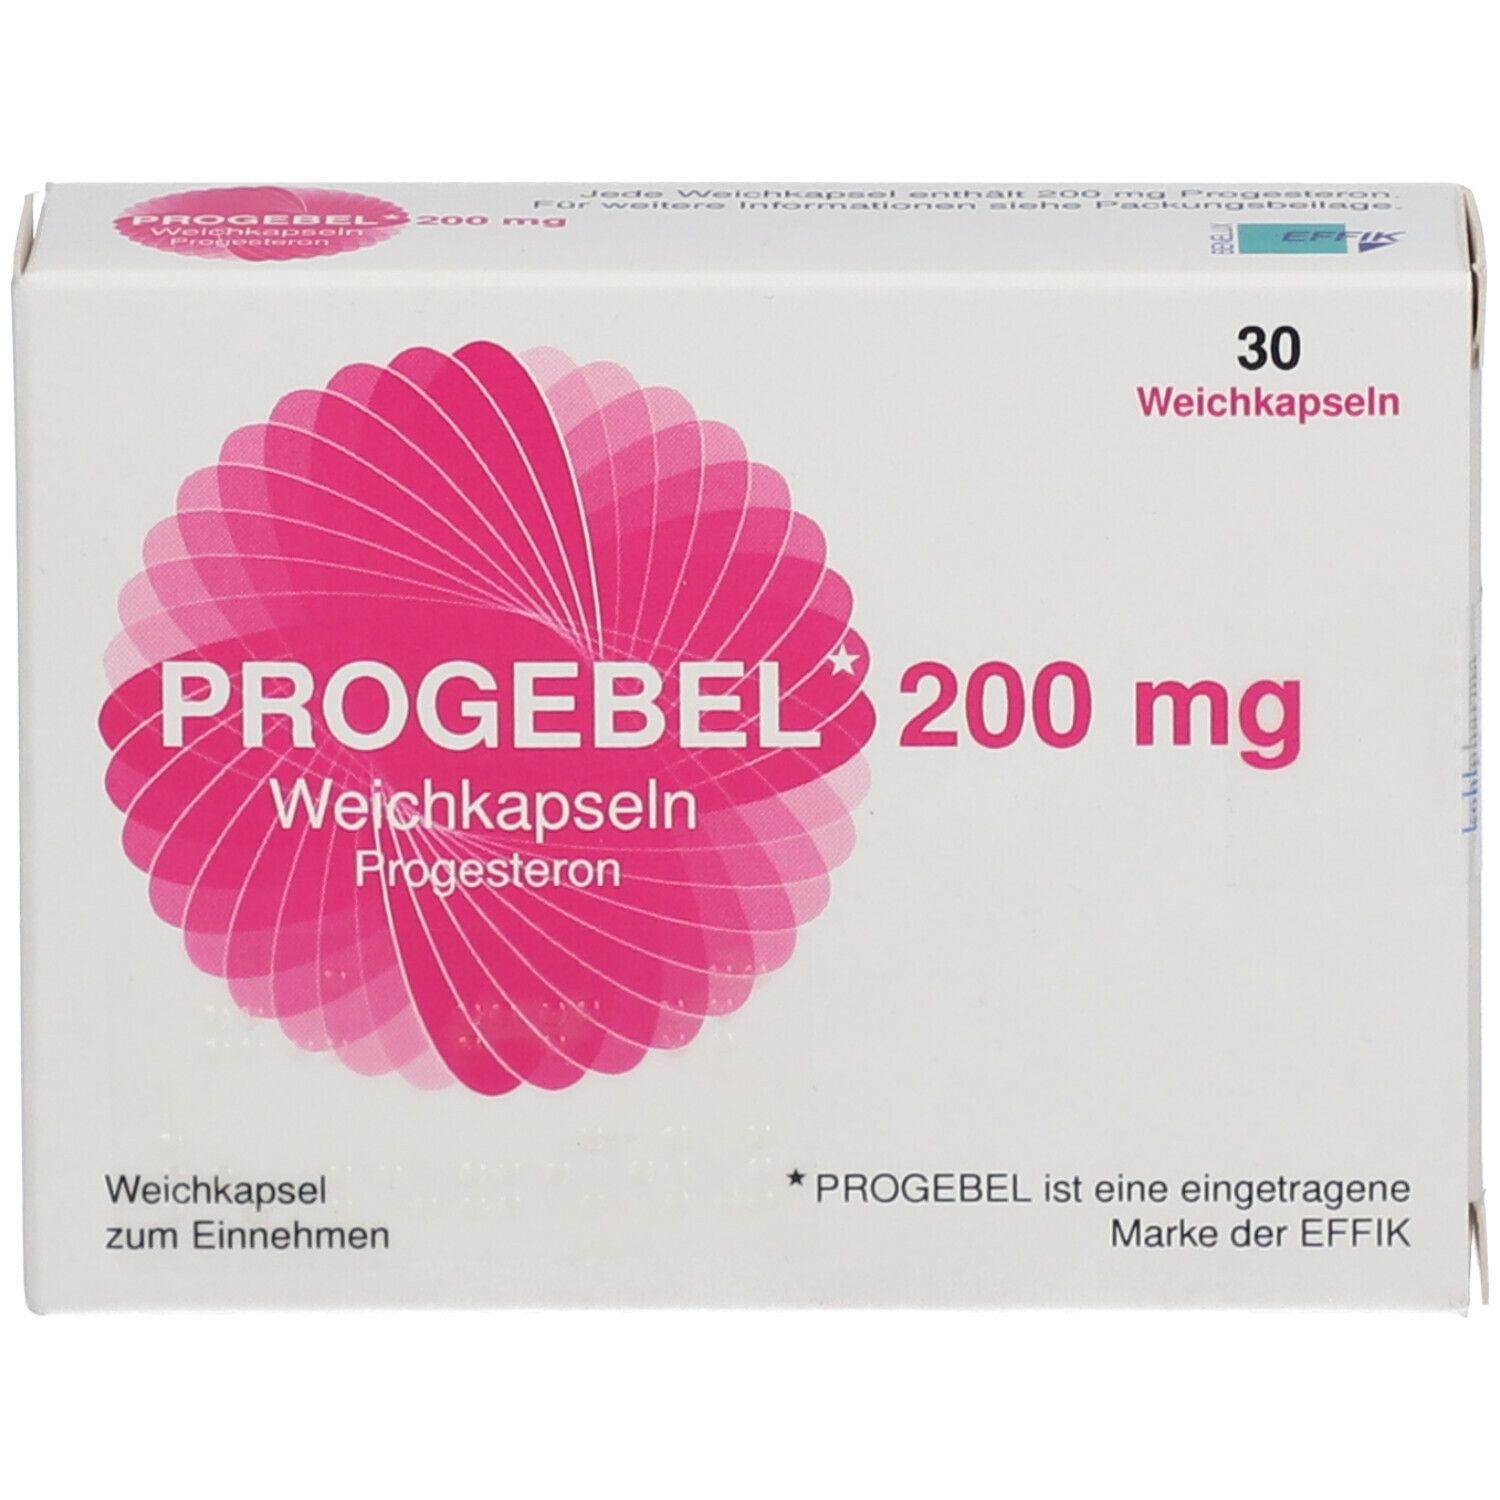 PROGEBEL 200 mg Weichkapseln